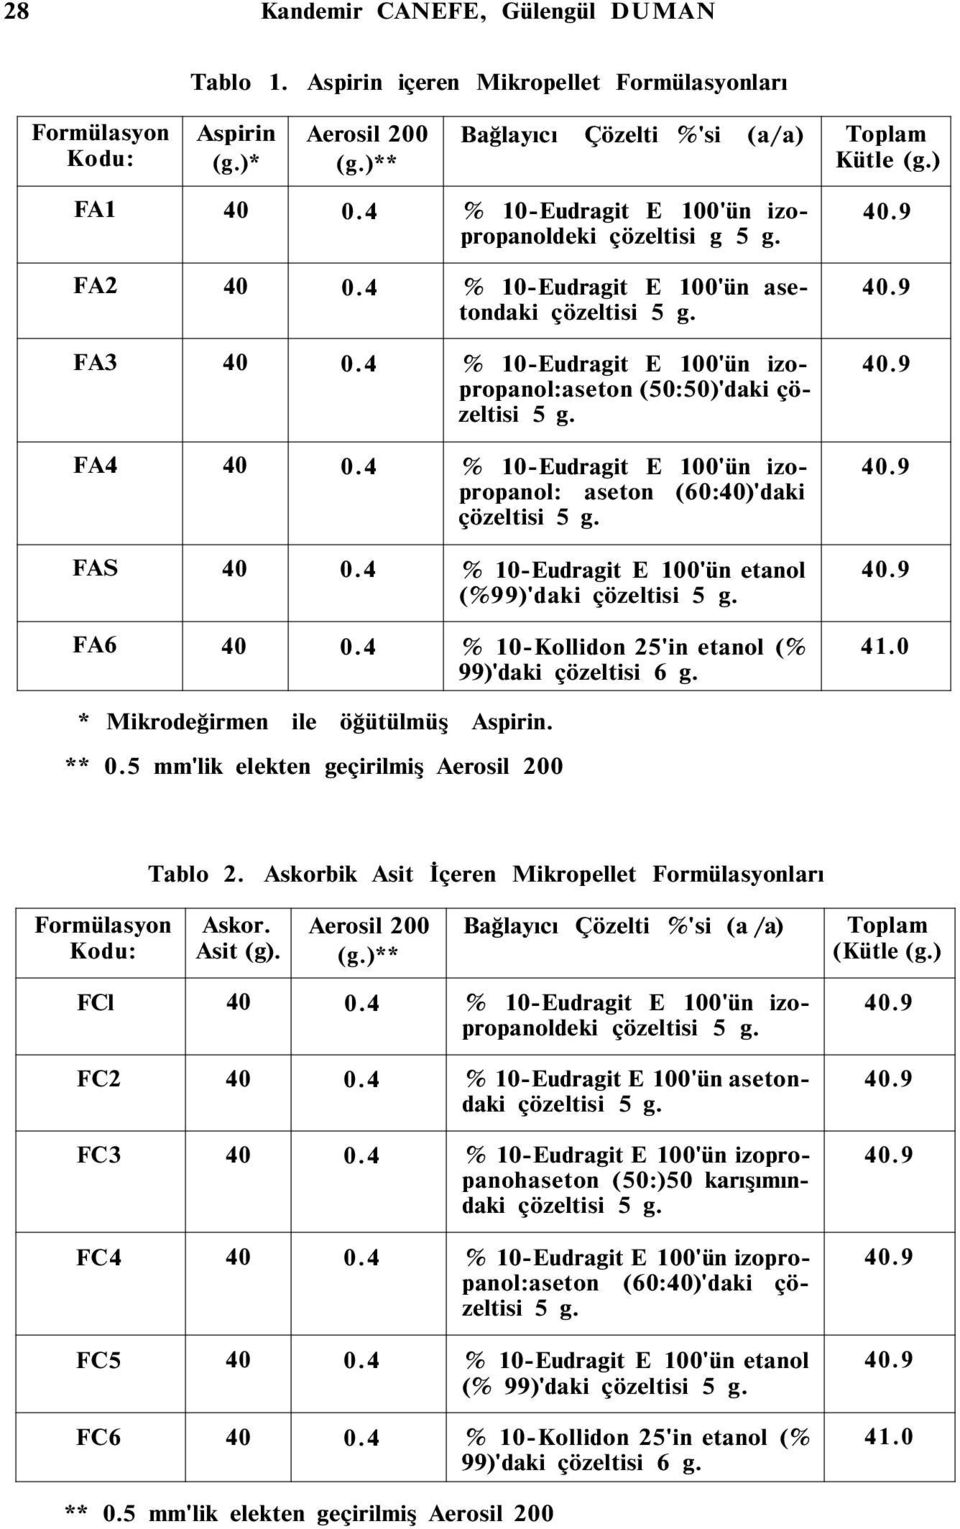 FA4 40 0.4 % 10-Eudragit E 100'ün izopropanol: aseton (60:40)'daki çözeltisi 5 g. FAS 40 0.4 % 10-Eudragit E 100'ün etanol (%99)'daki çözeltisi 5 g. FA6 40 0.